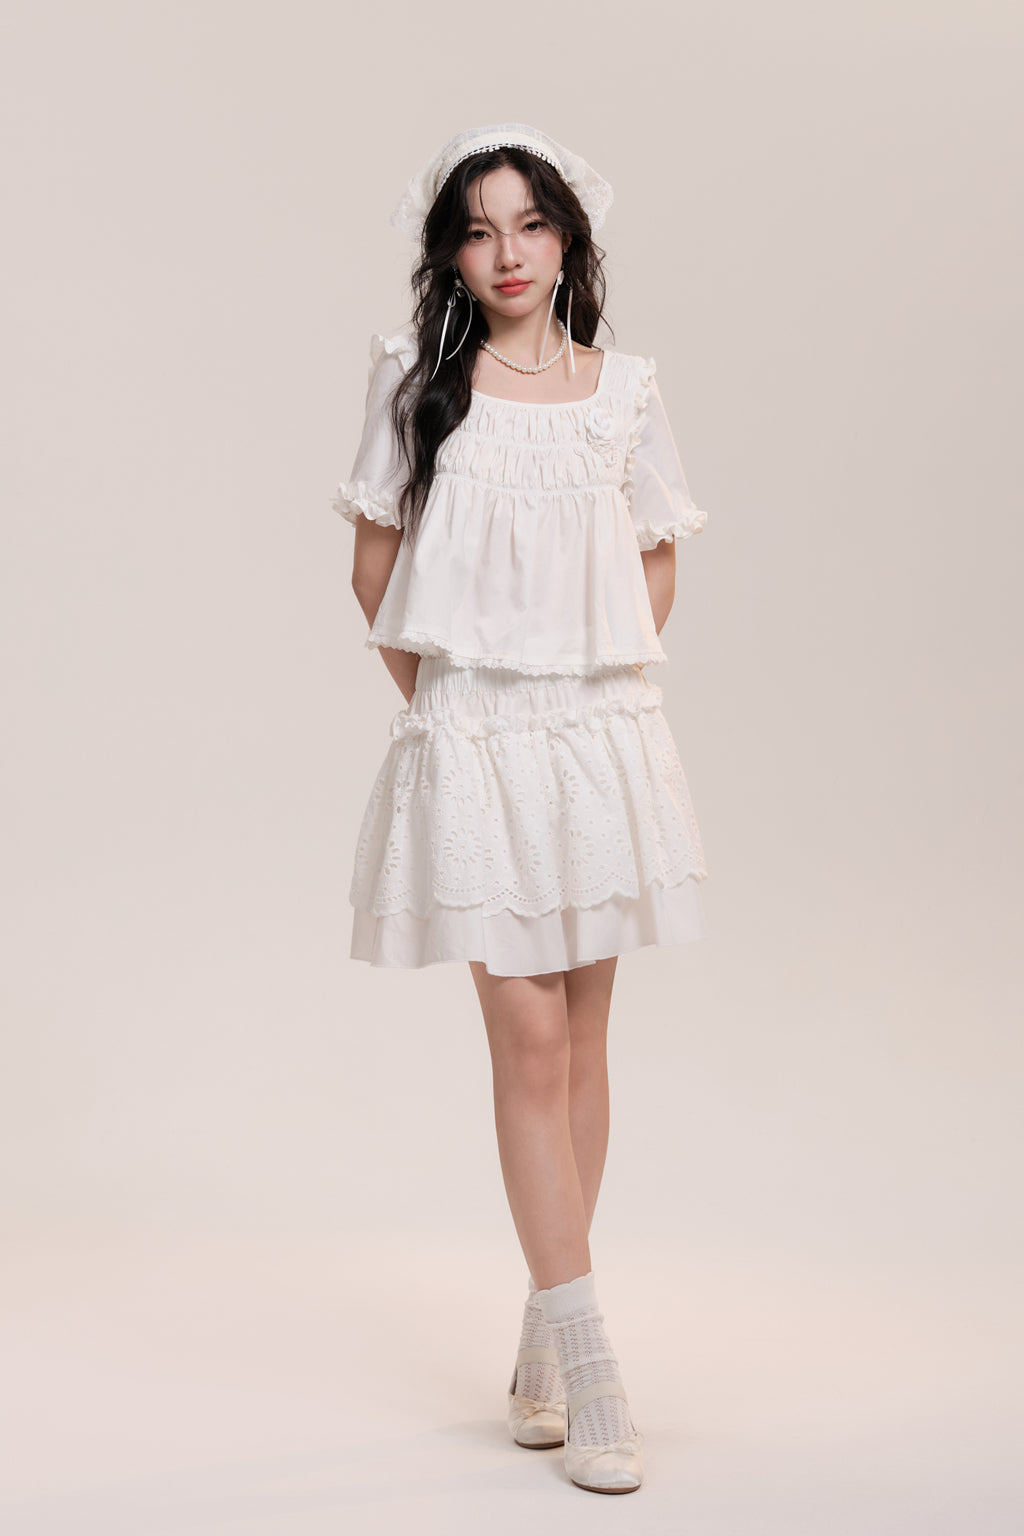 Flower Lace Bow Shirt/Short Skirt AOO0002